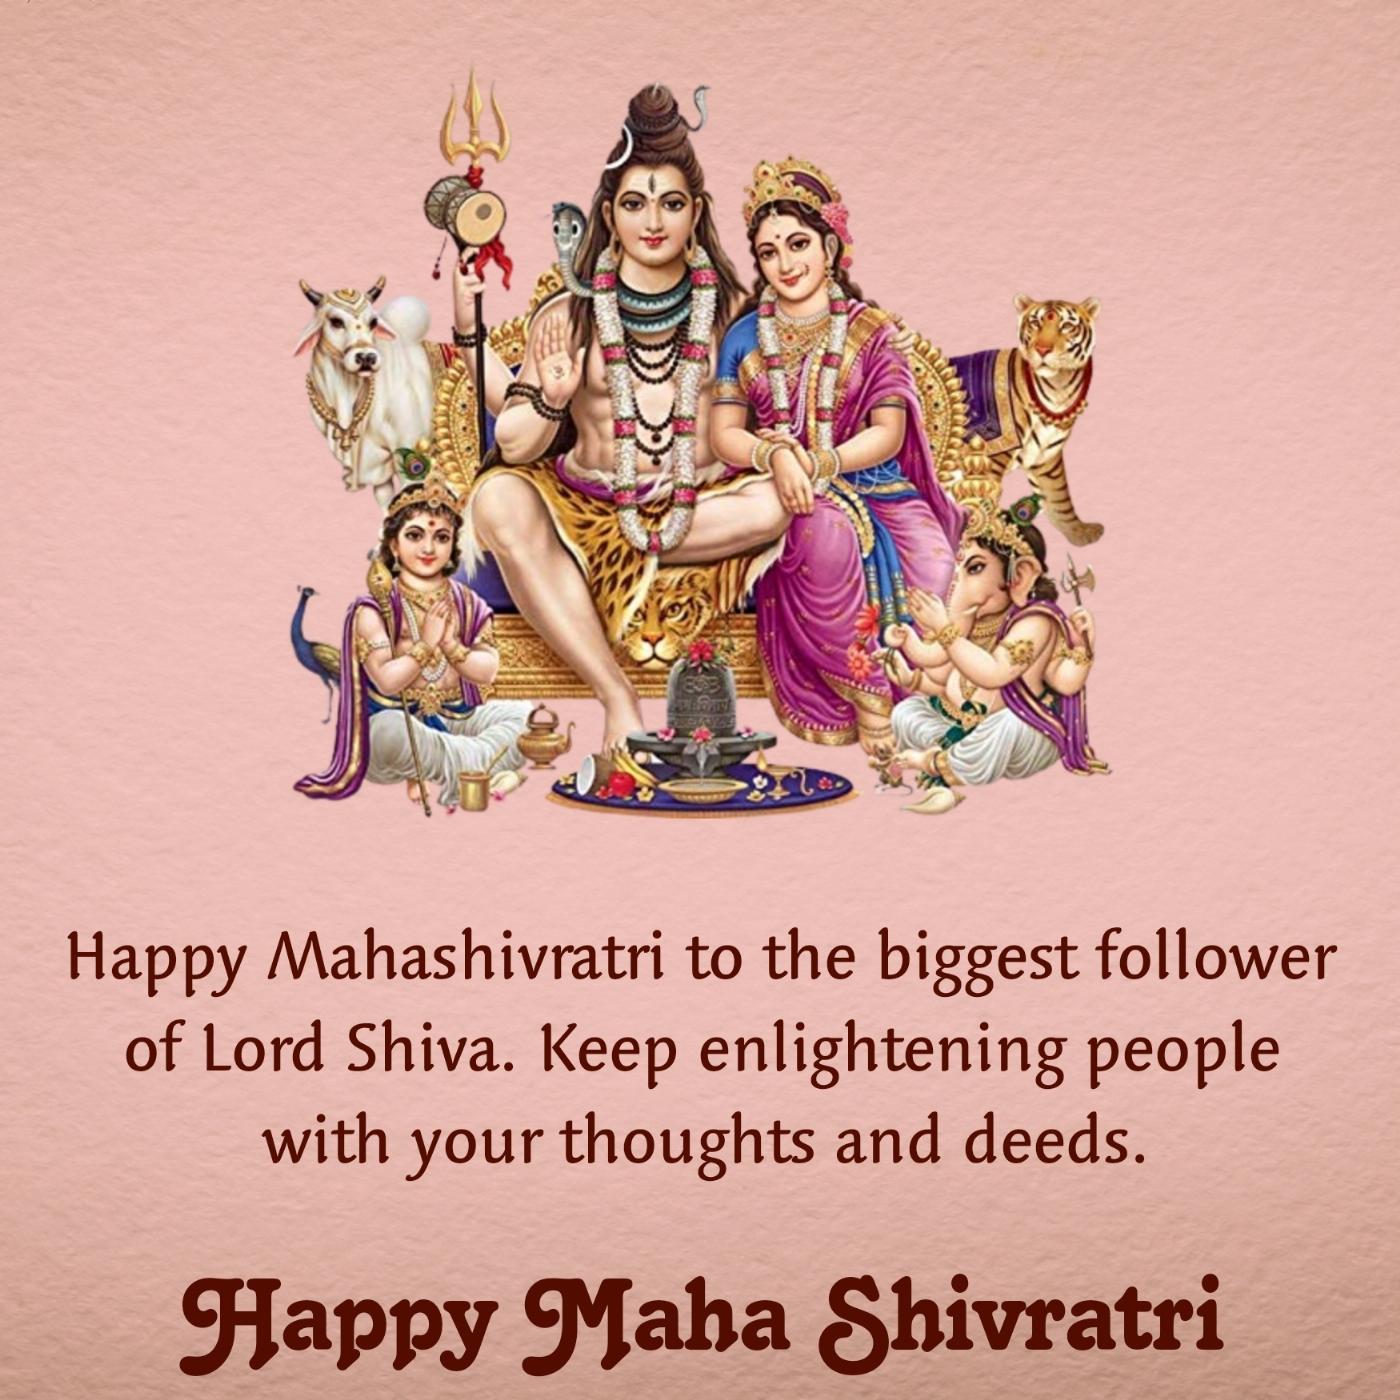 Happy Mahashivratri to the biggest follower of Lord Shiva